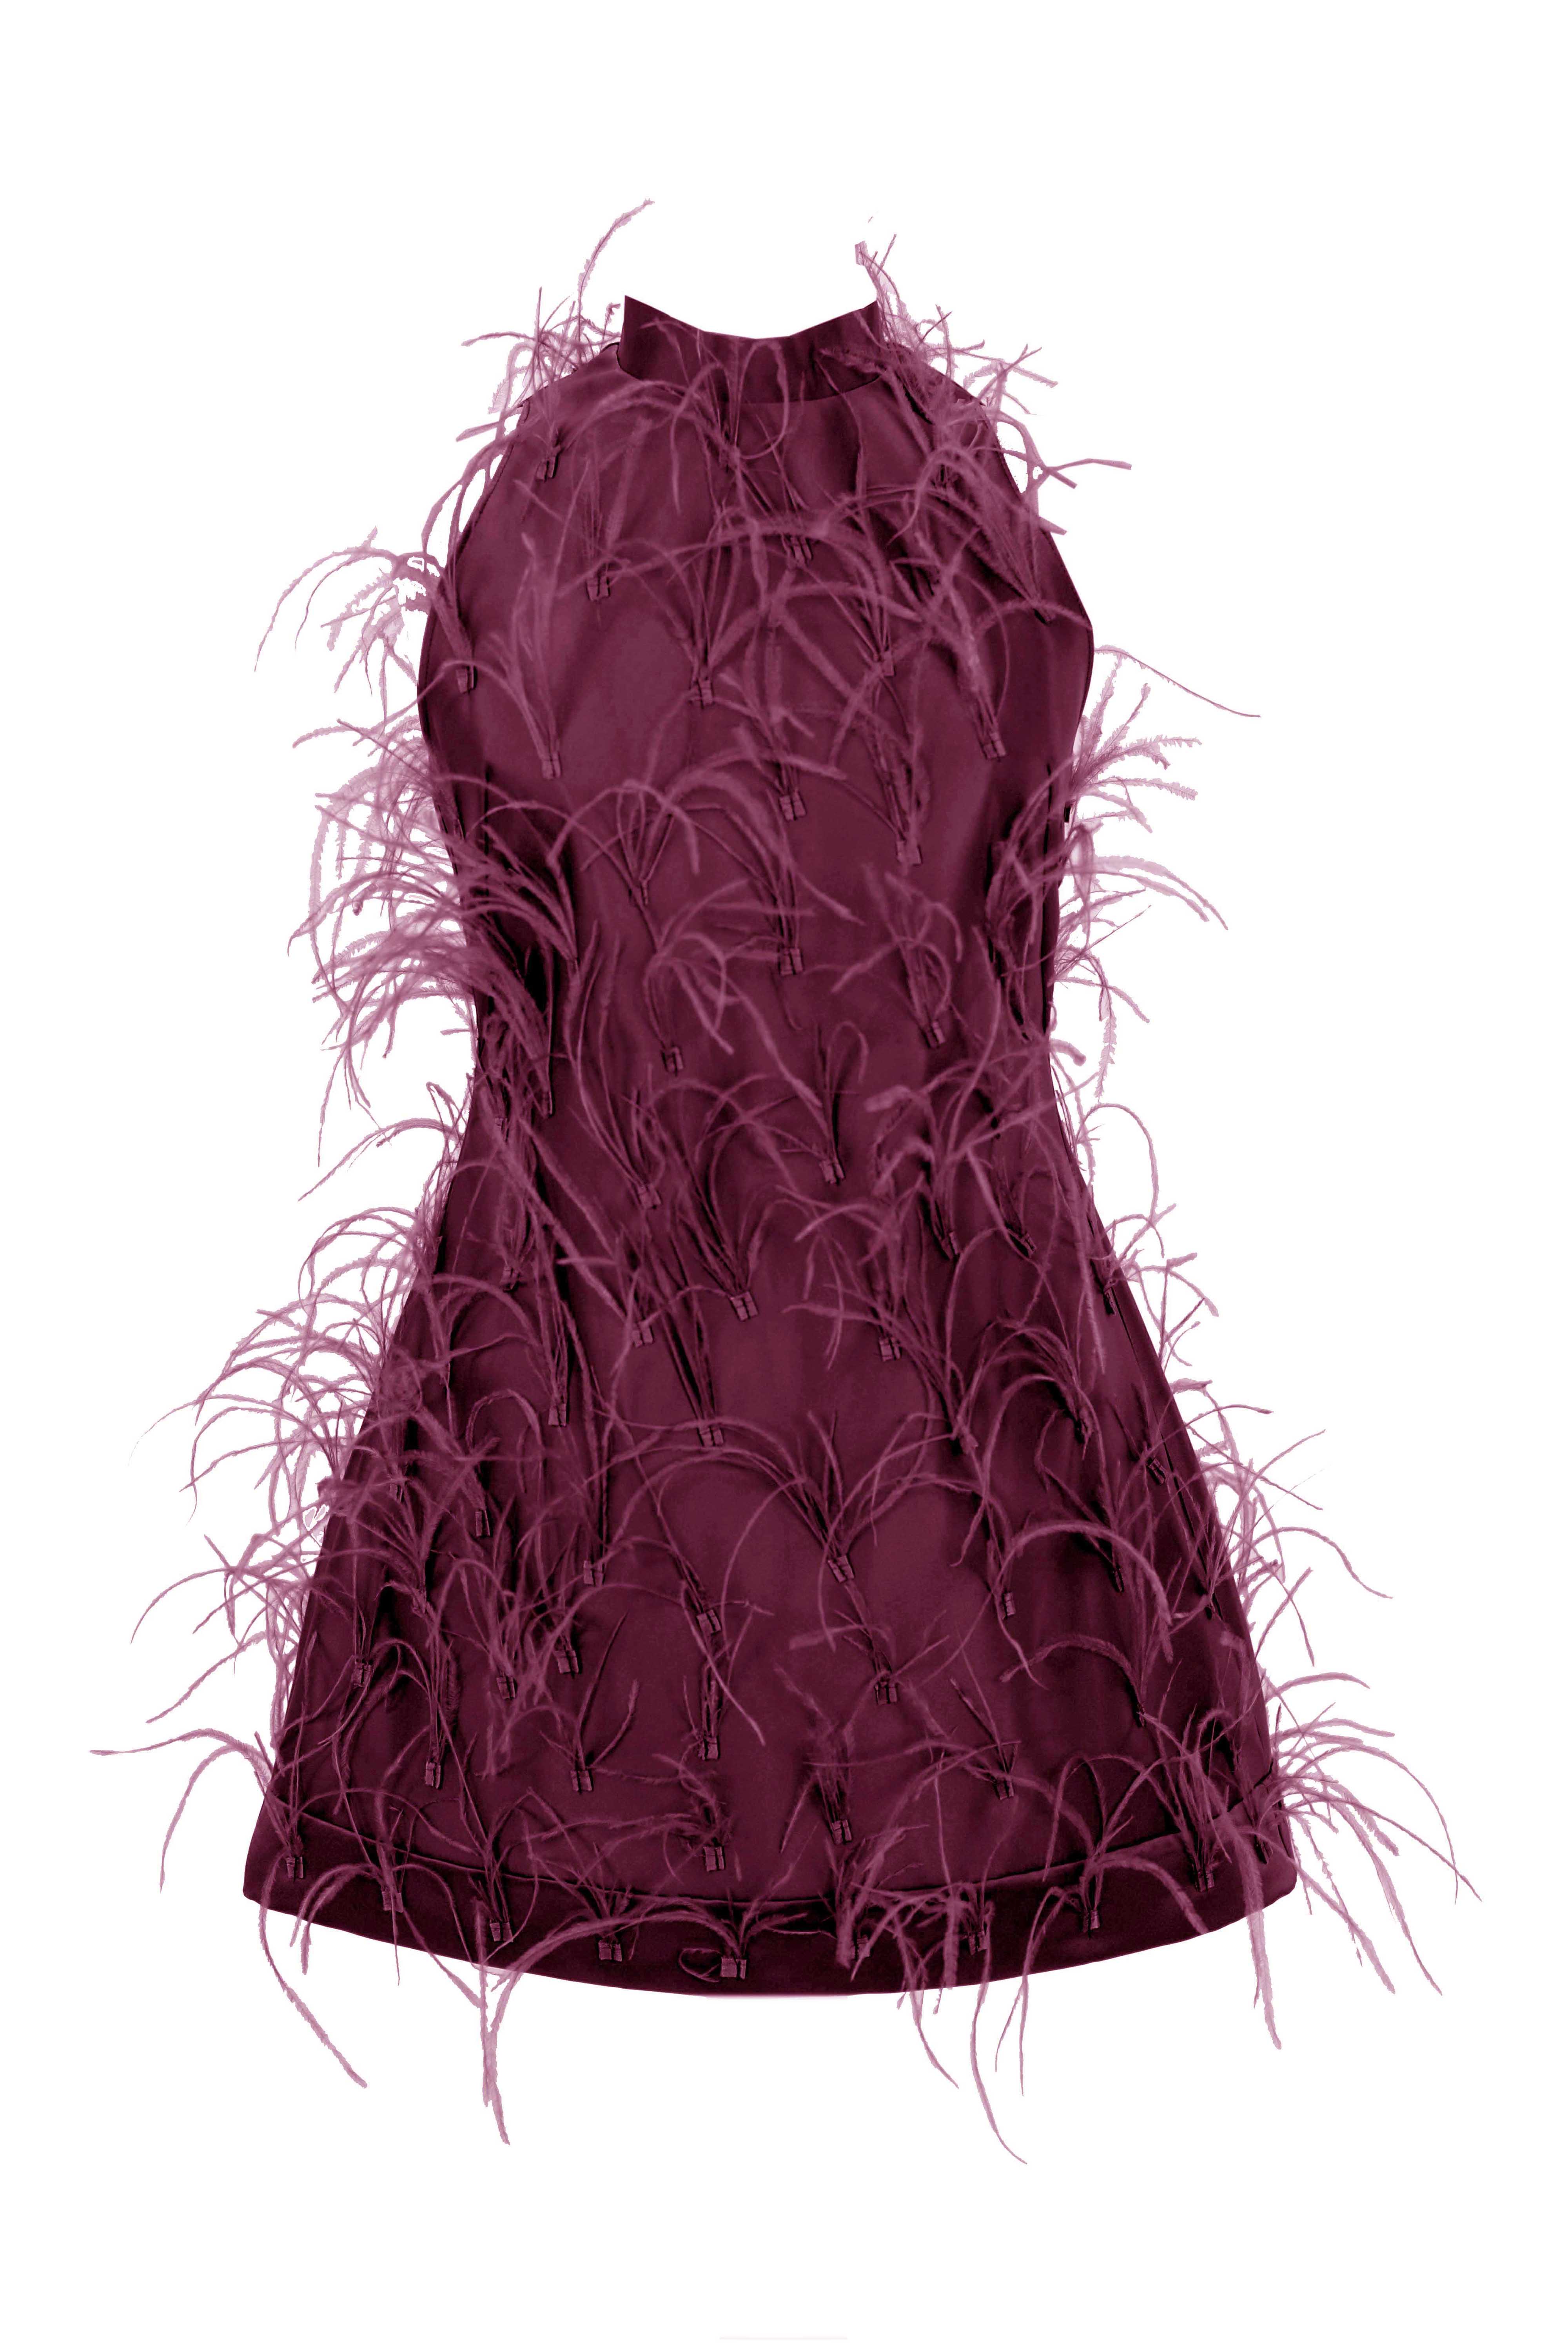 R23101 - WINE 01 - ALMEEA red wine mini dress with feathers - AMBAR STUDIO